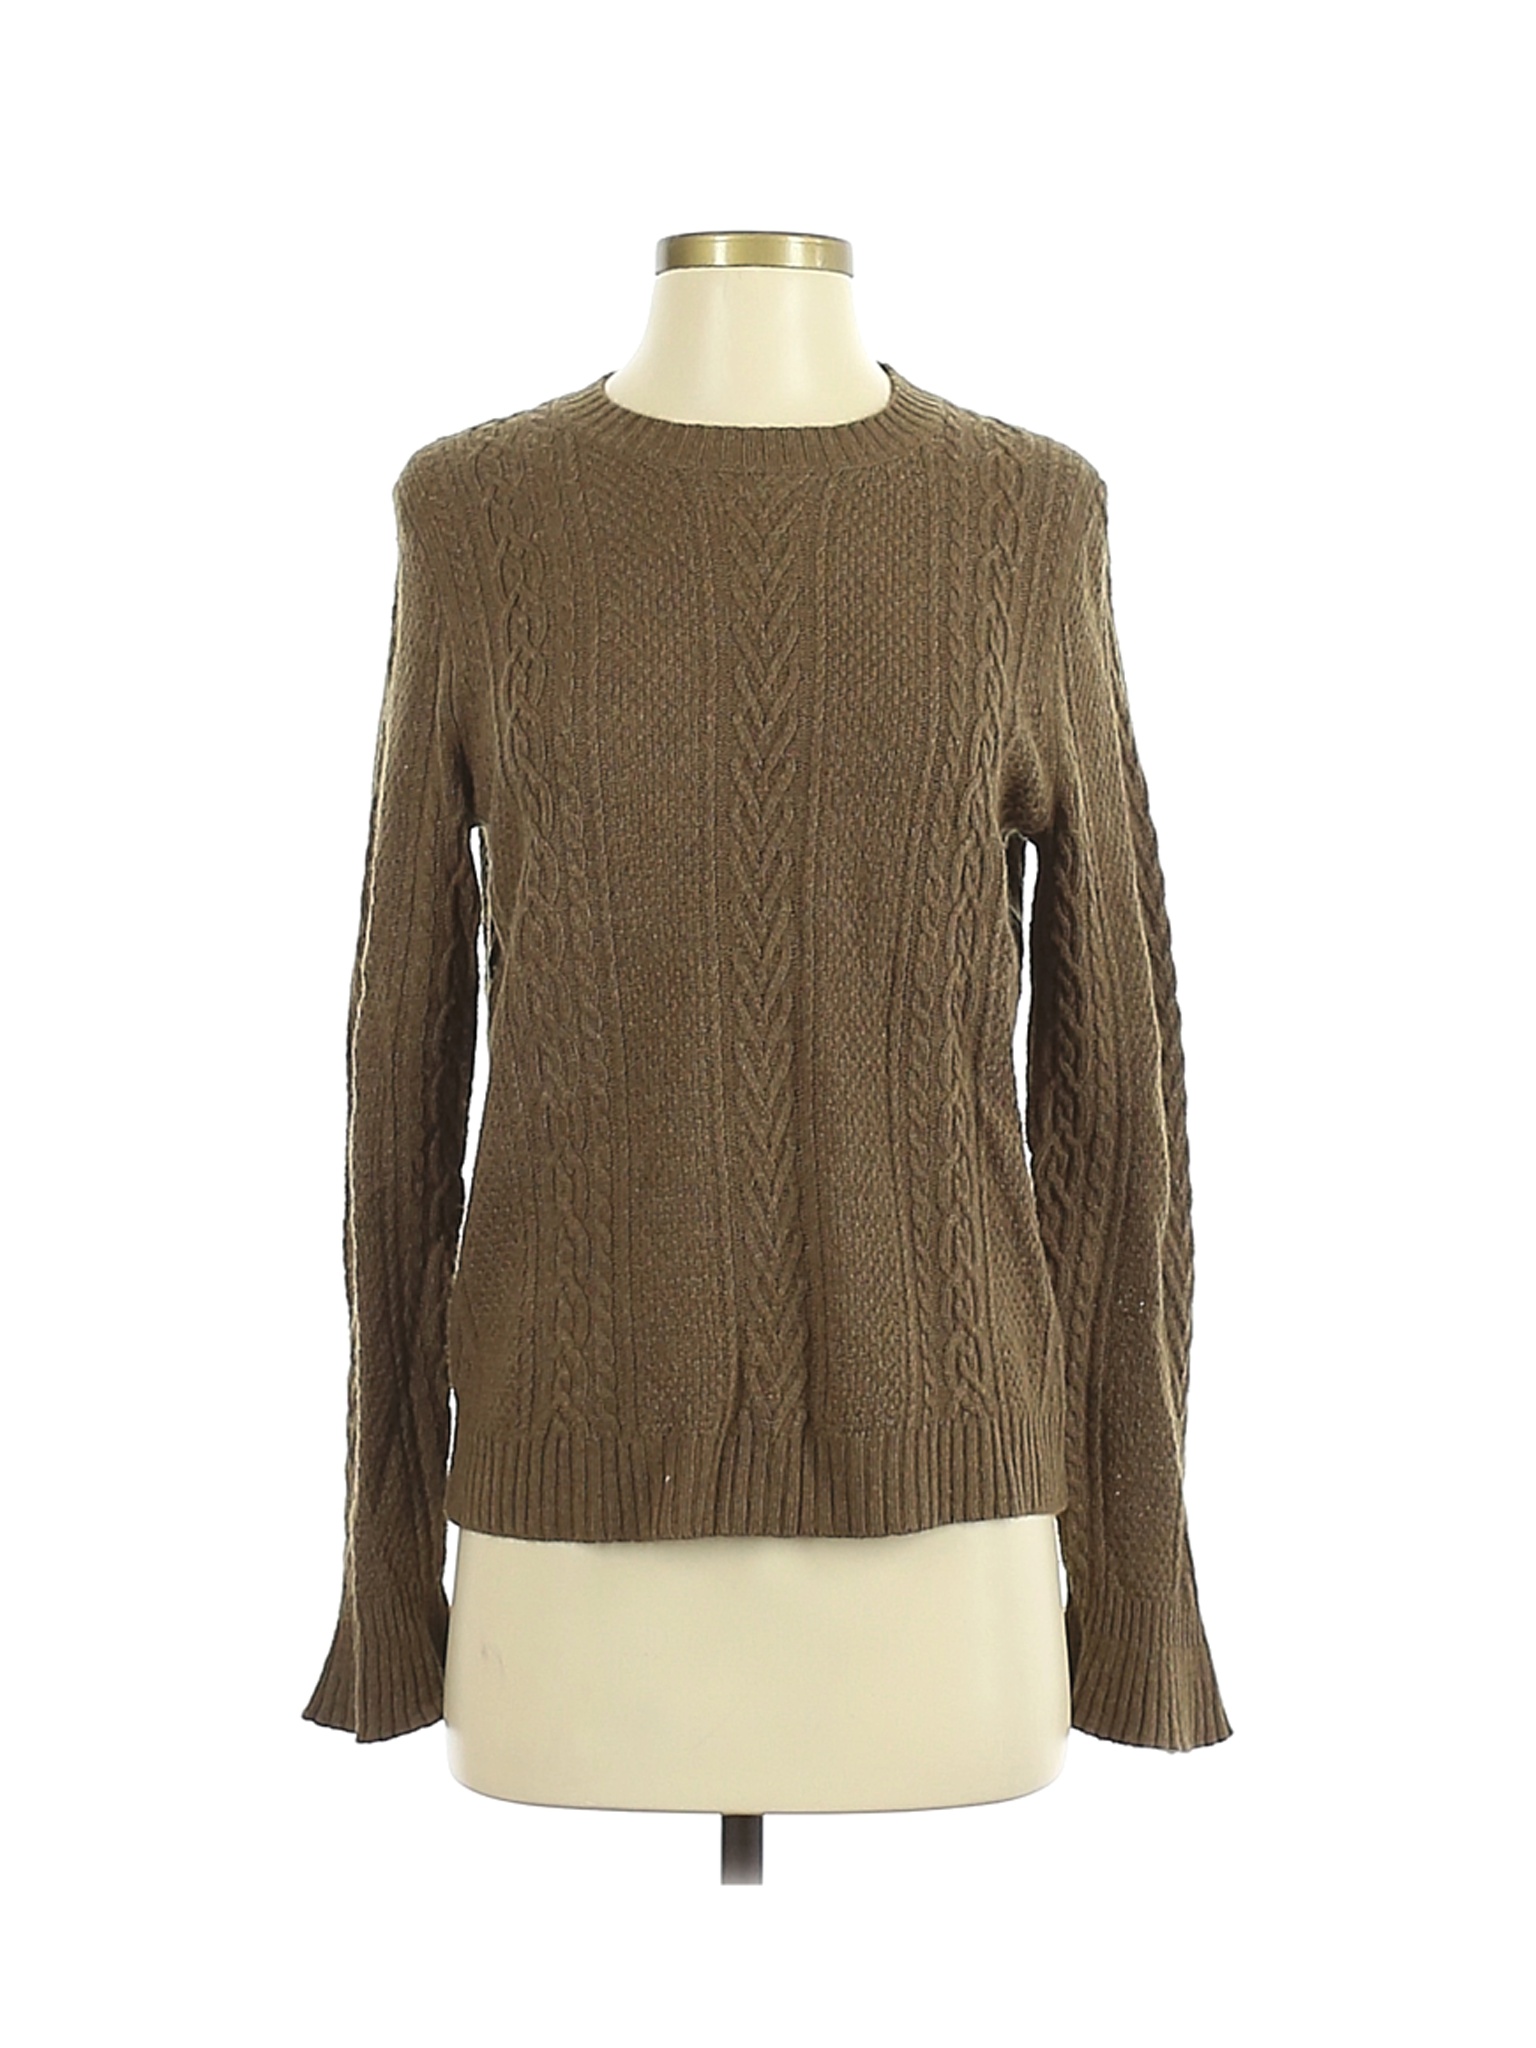 J.Crew Women Green Pullover Sweater S | eBay